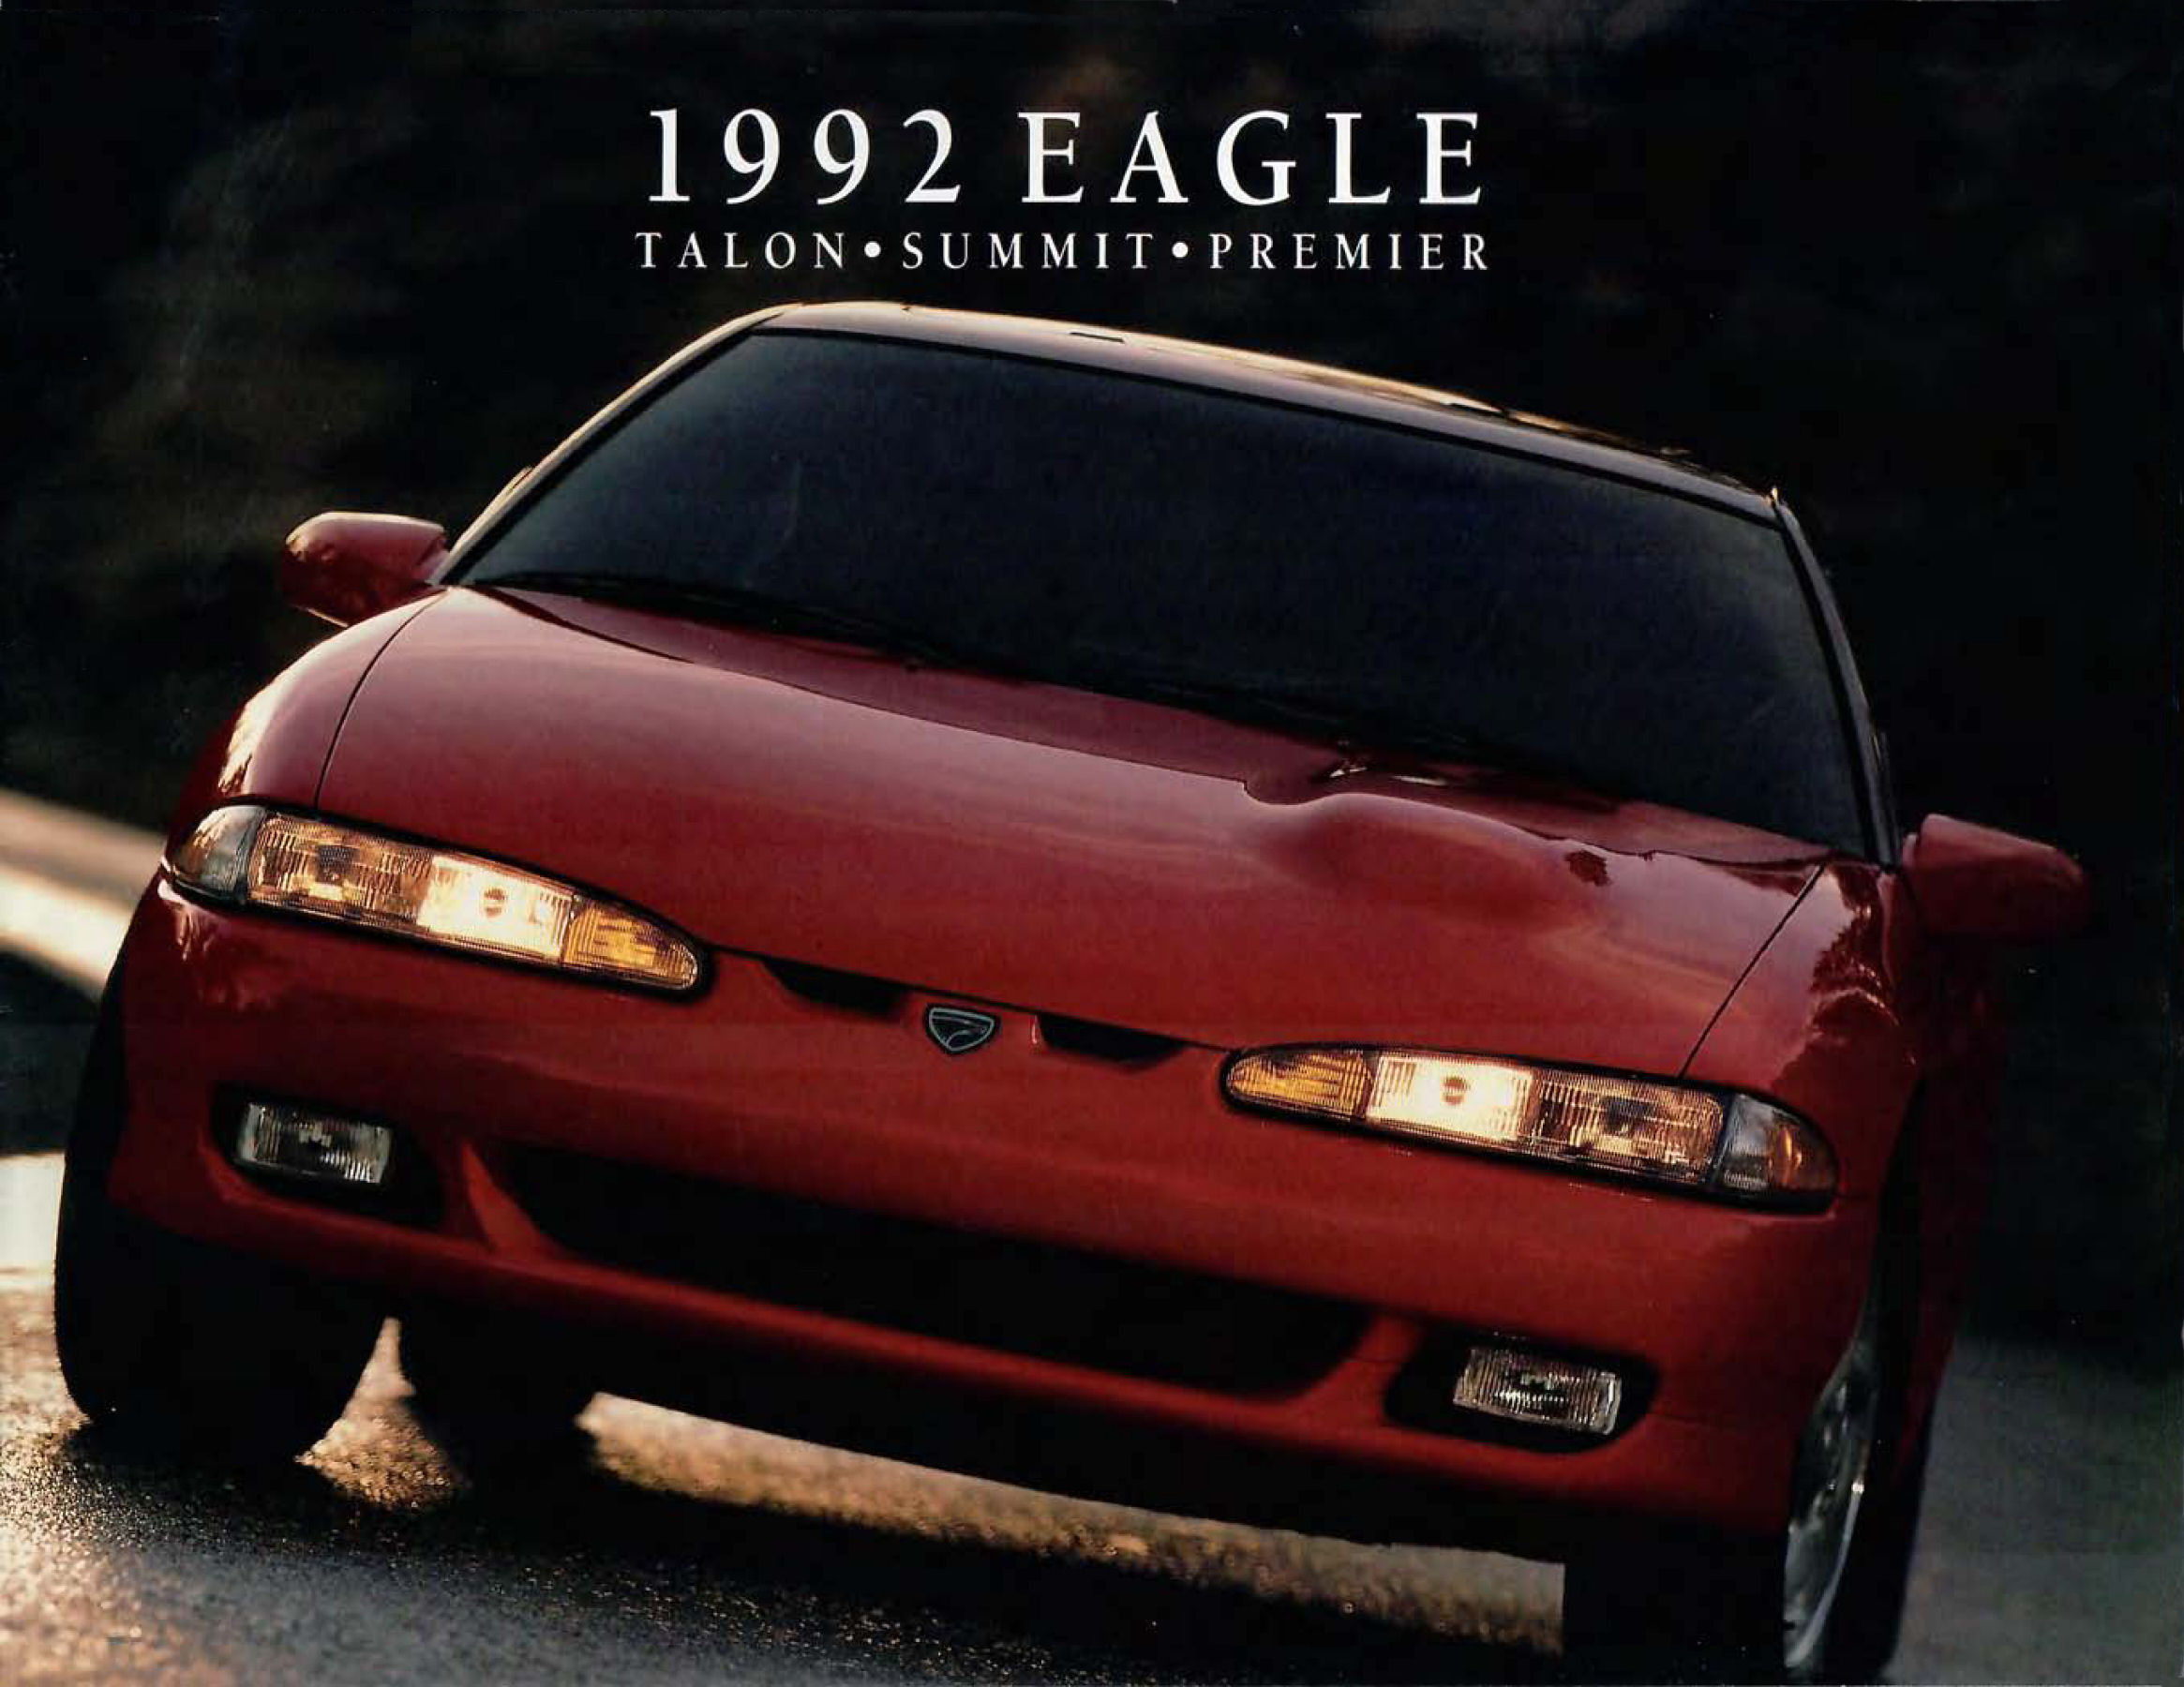 1992 Eagle Full Line-01